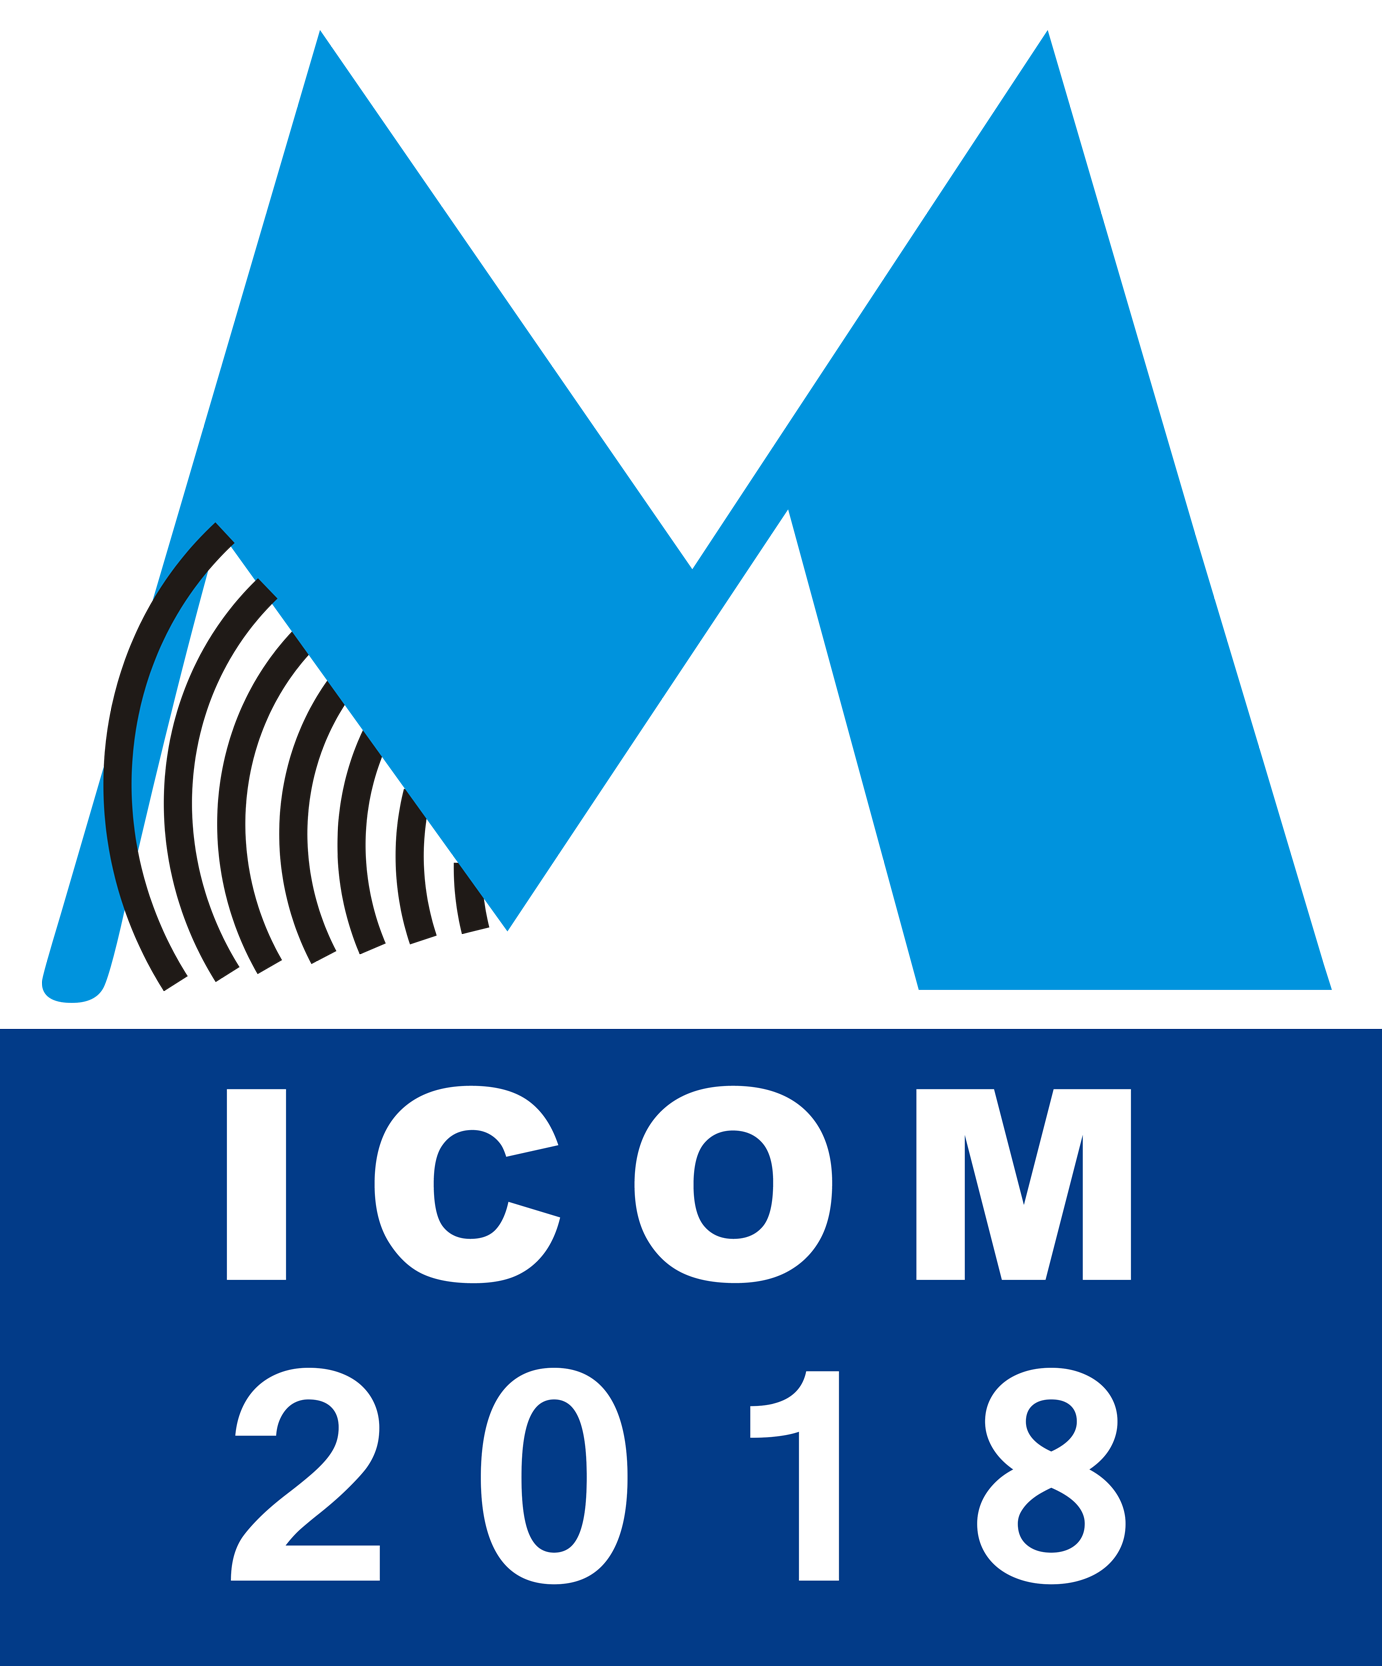 The 6th International Conference on Marketing 2018 (ICOM 2018), Hanoi, Ha Noi, Vietnam